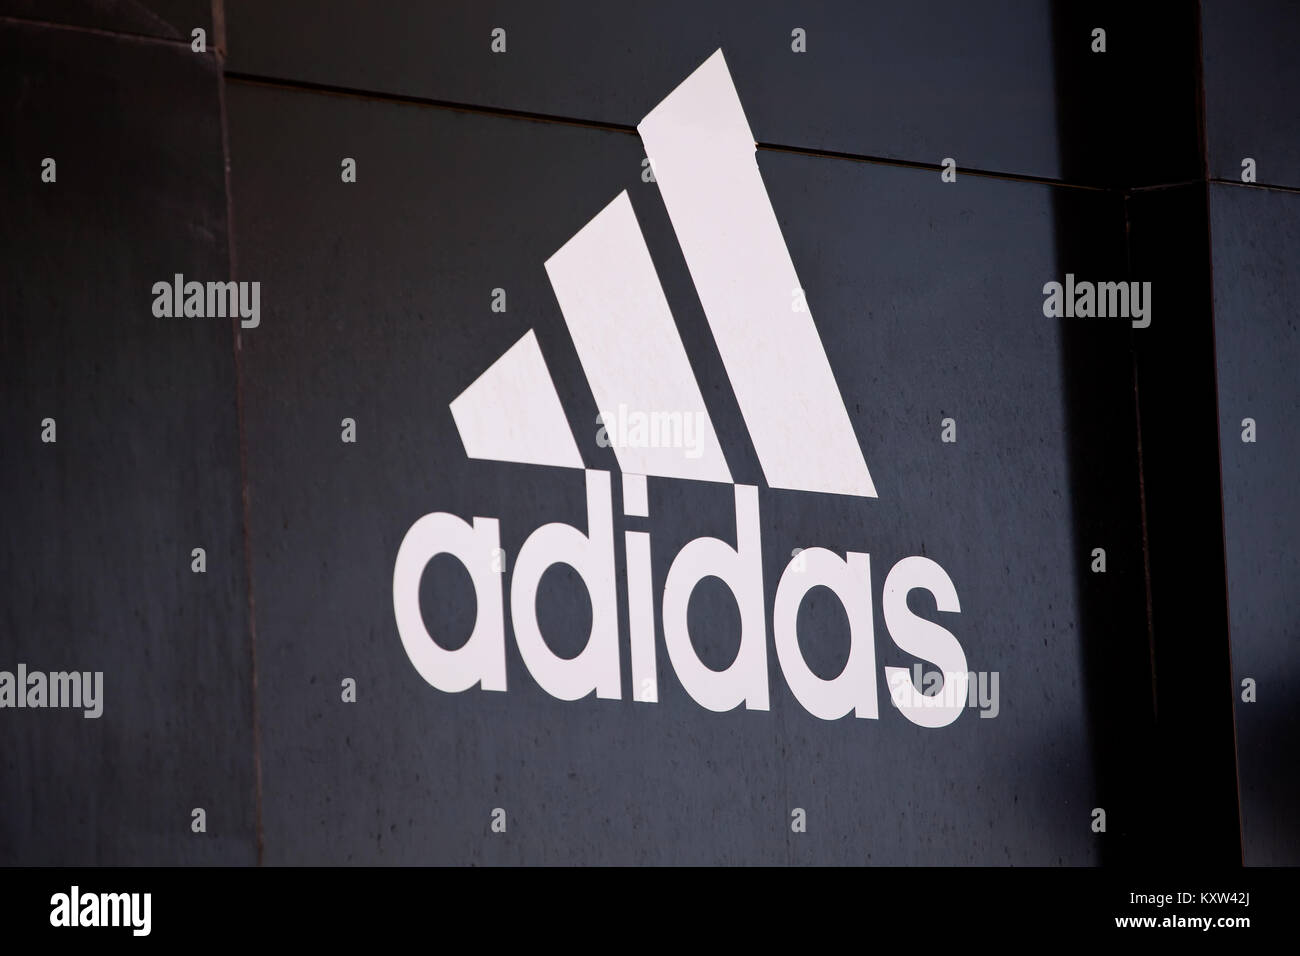 SOFIA, BULGARIA - APRIL 25, 2017: A sign for an Adidas retail store  close-up view Stock Photo - Alamy